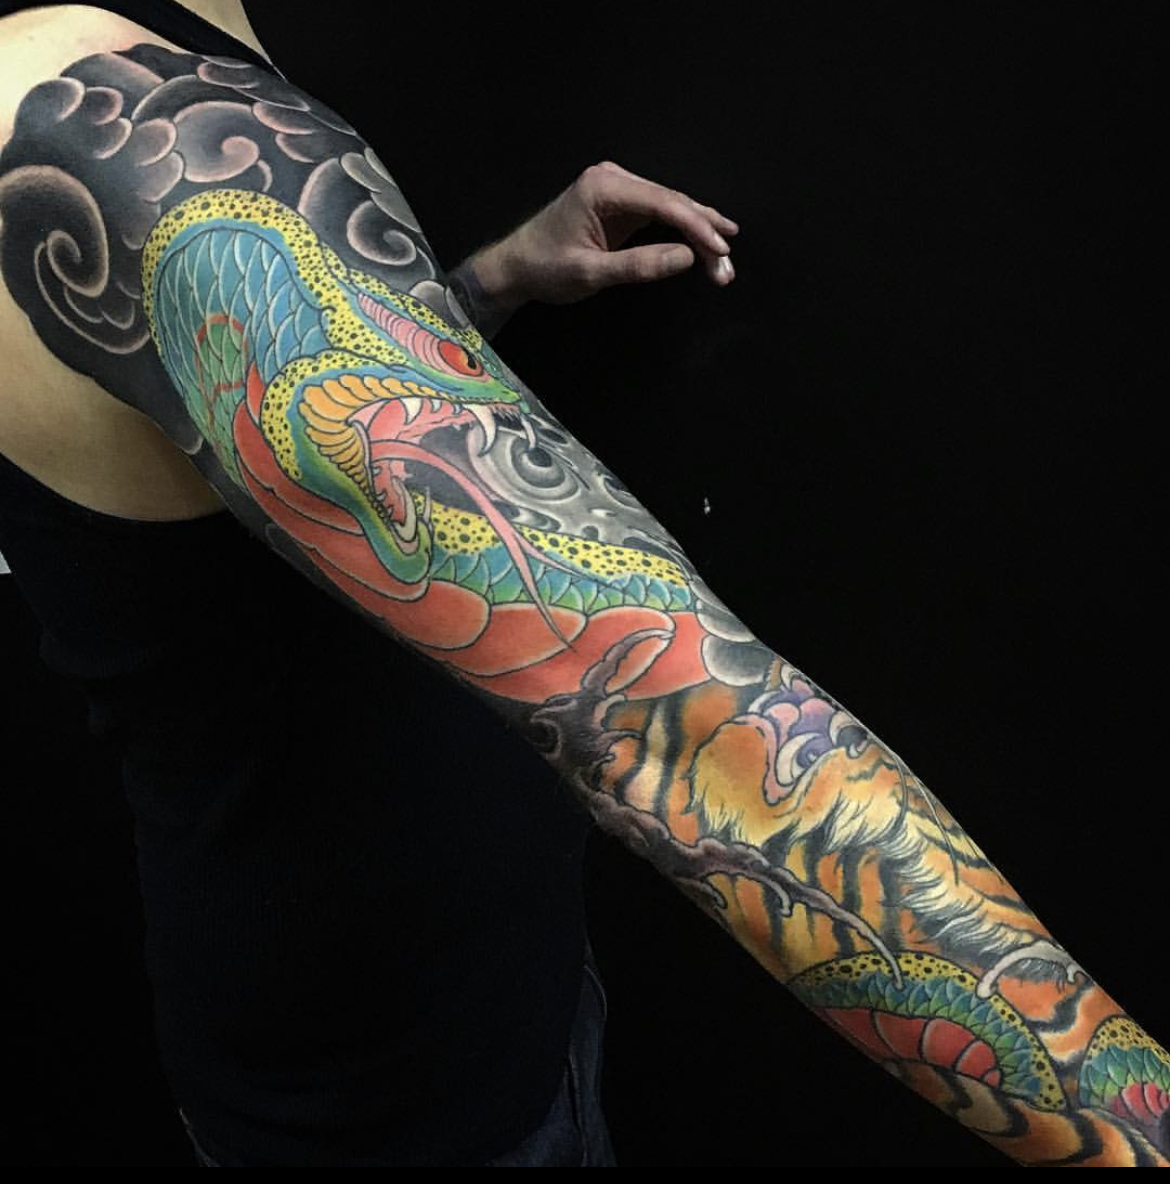 koi and chrysanthemum leg half sleeve tattoo by Dana Helmuth